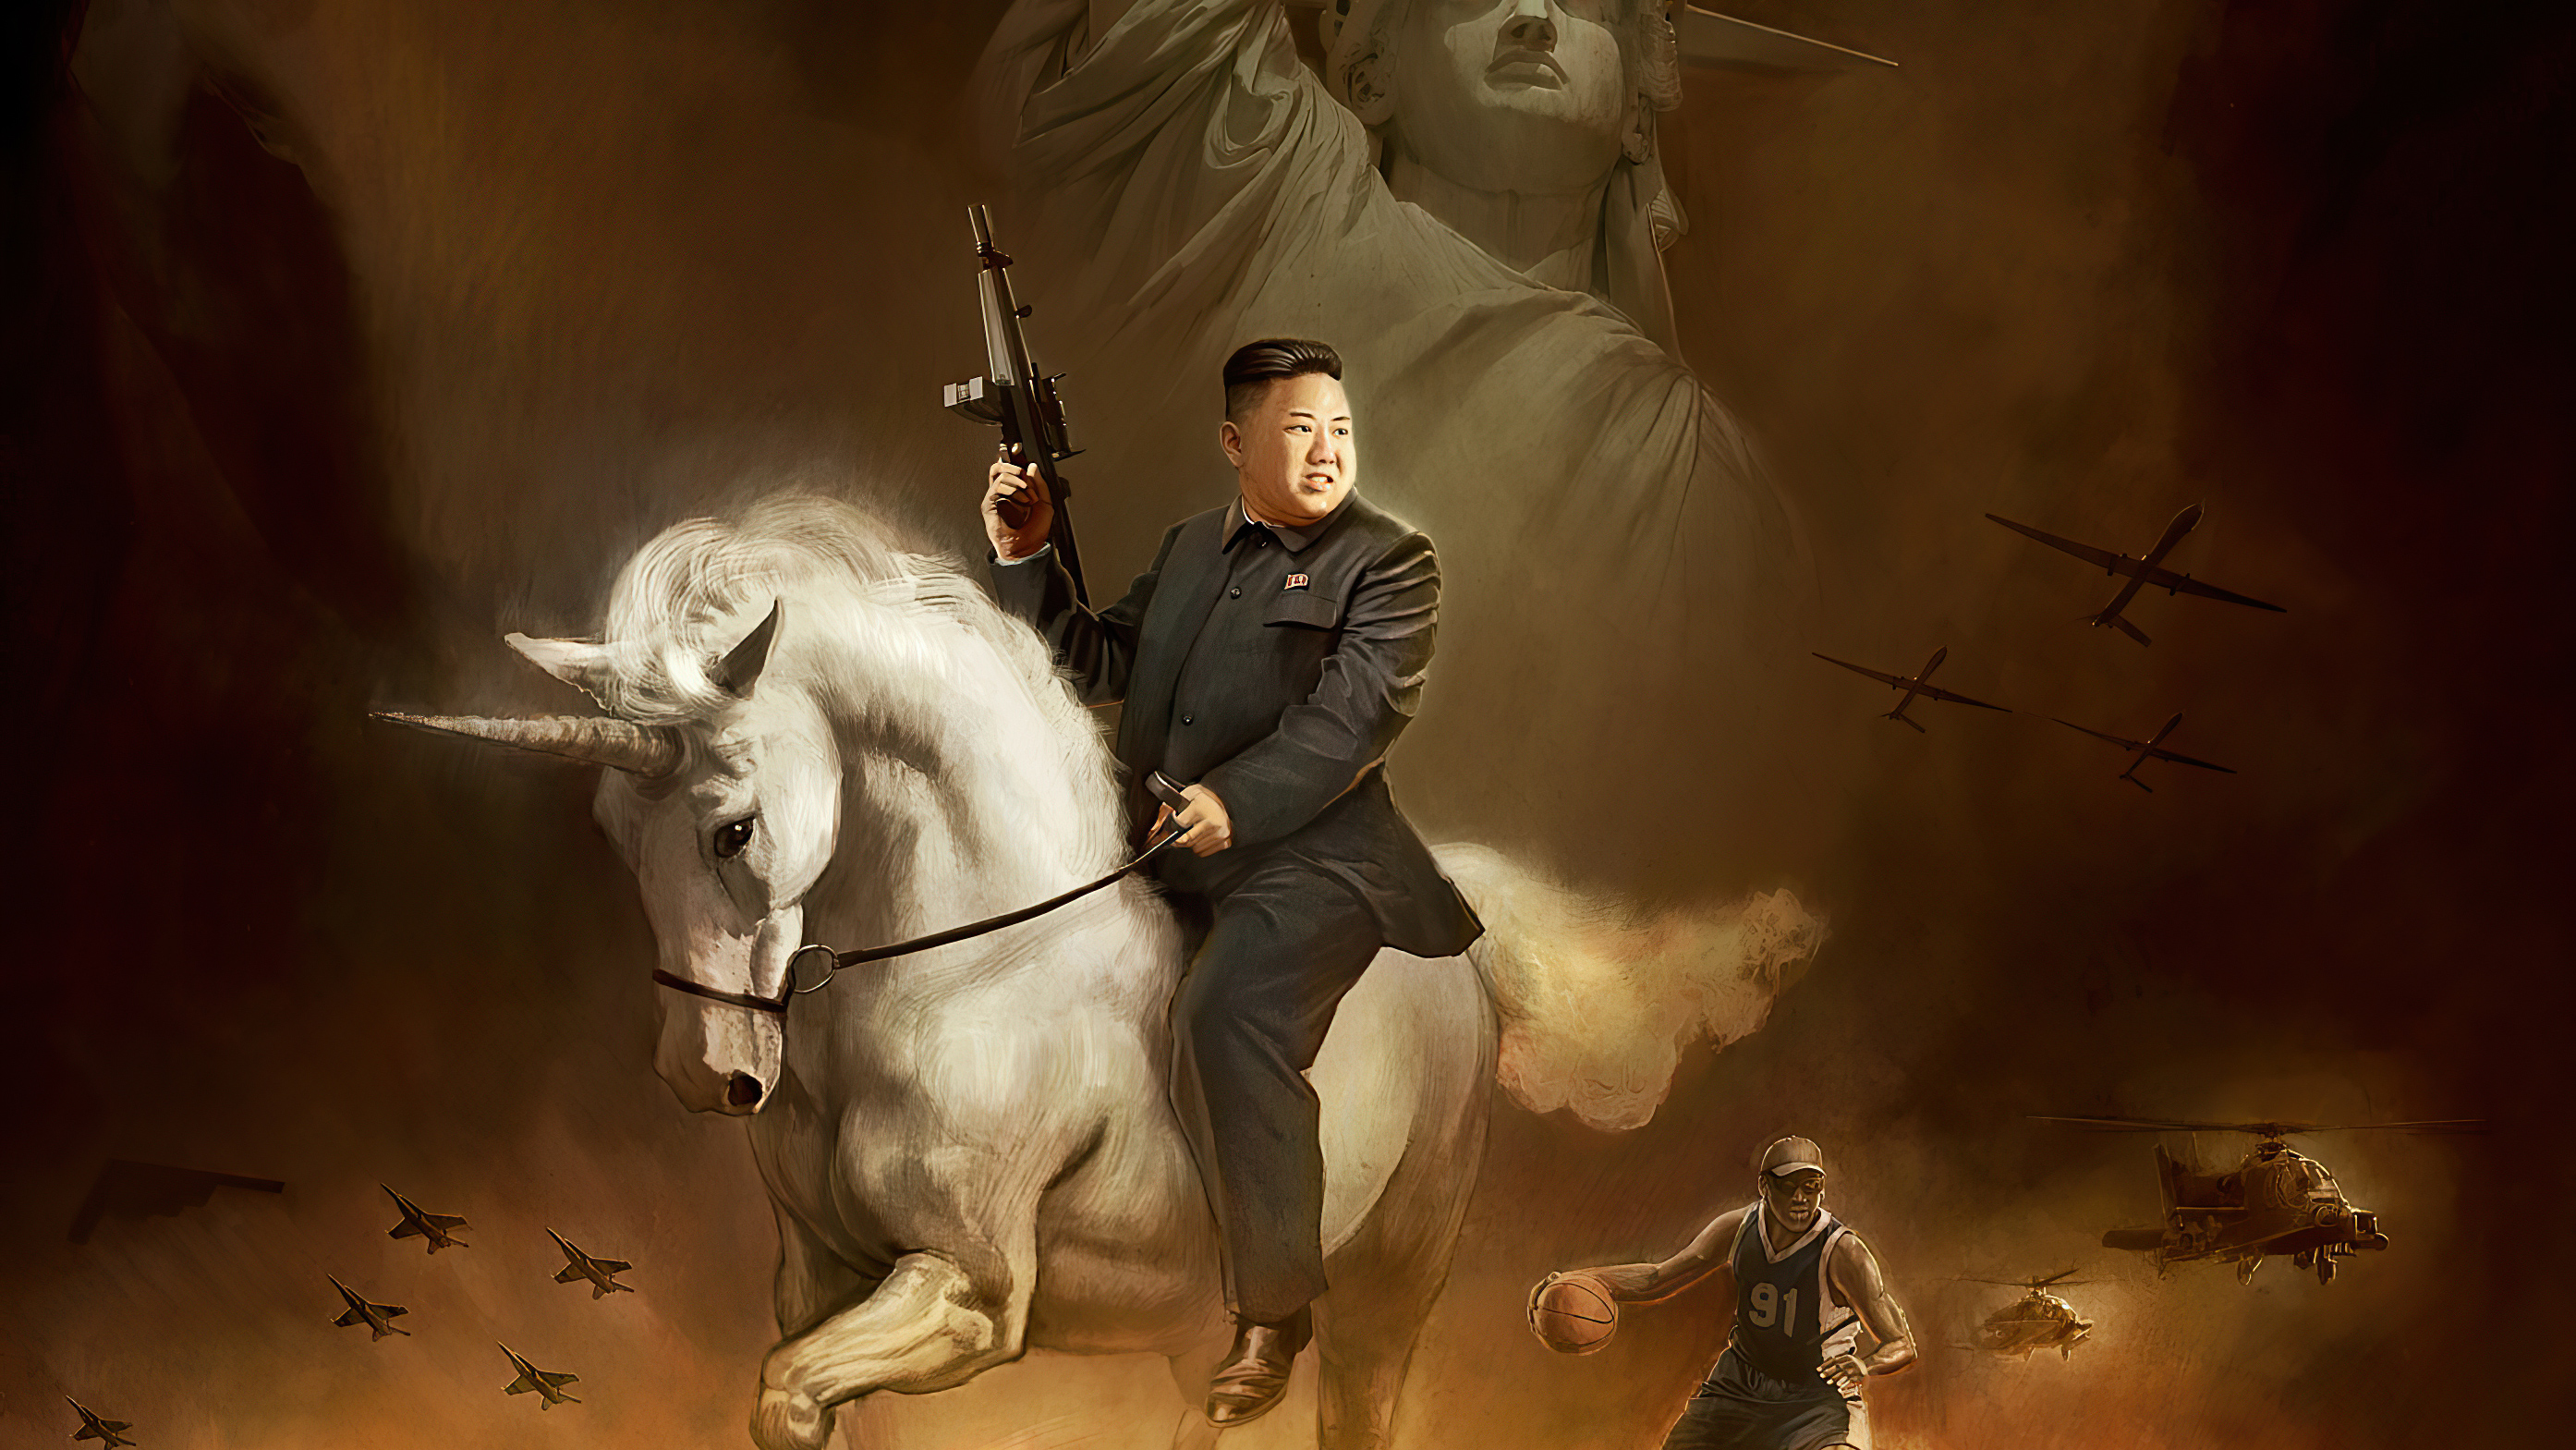 Kim Jong Un Wallpapers